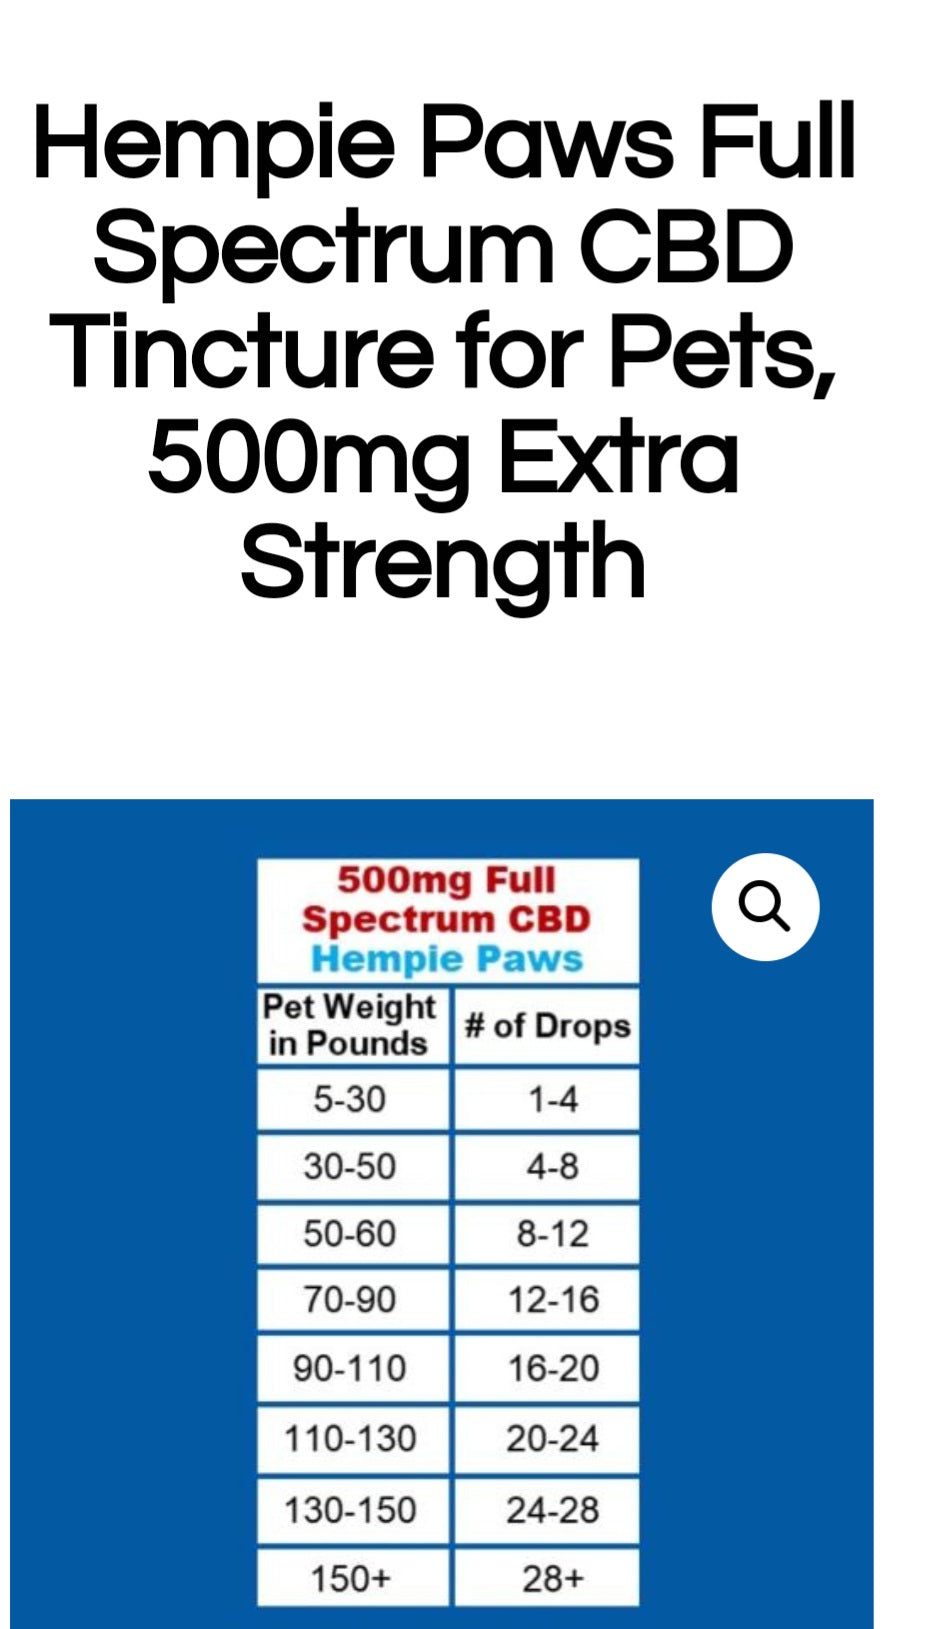 Hempie Paws Full Spectrum CBD Tincture for Pets, 500mg Extra Strength